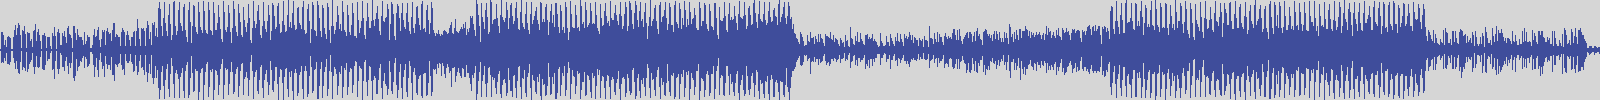 nf_boyz_records [NFY072] Johnny Divine - Oscilloscopy [The Rhythms Mix] audio wave form